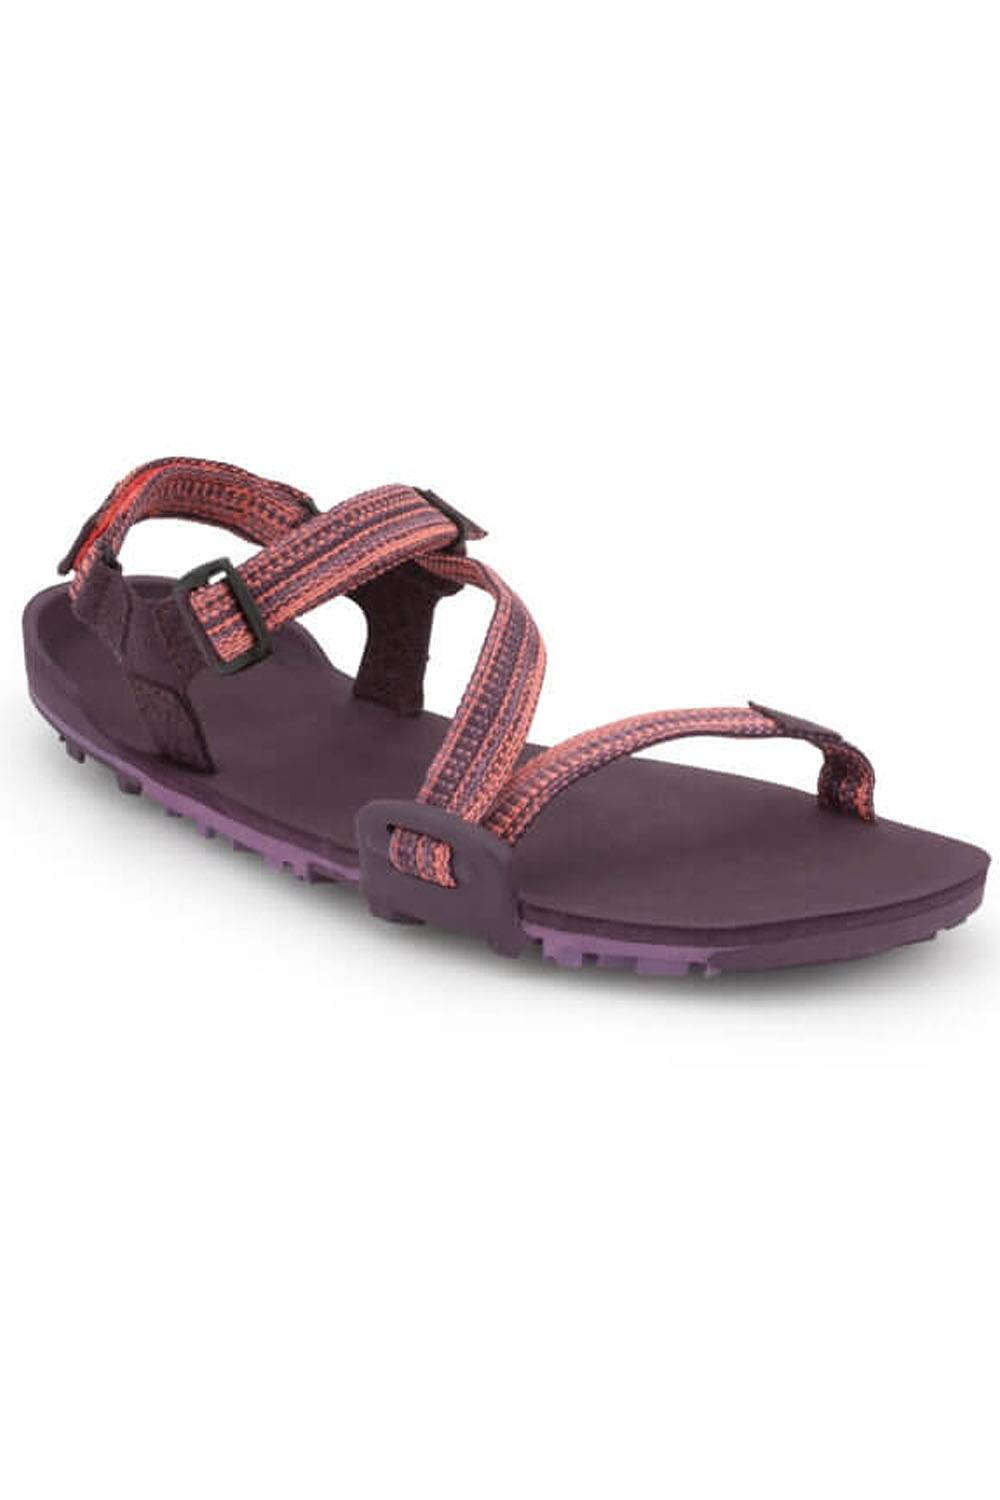 xero shoes barefoot minimalist sandals